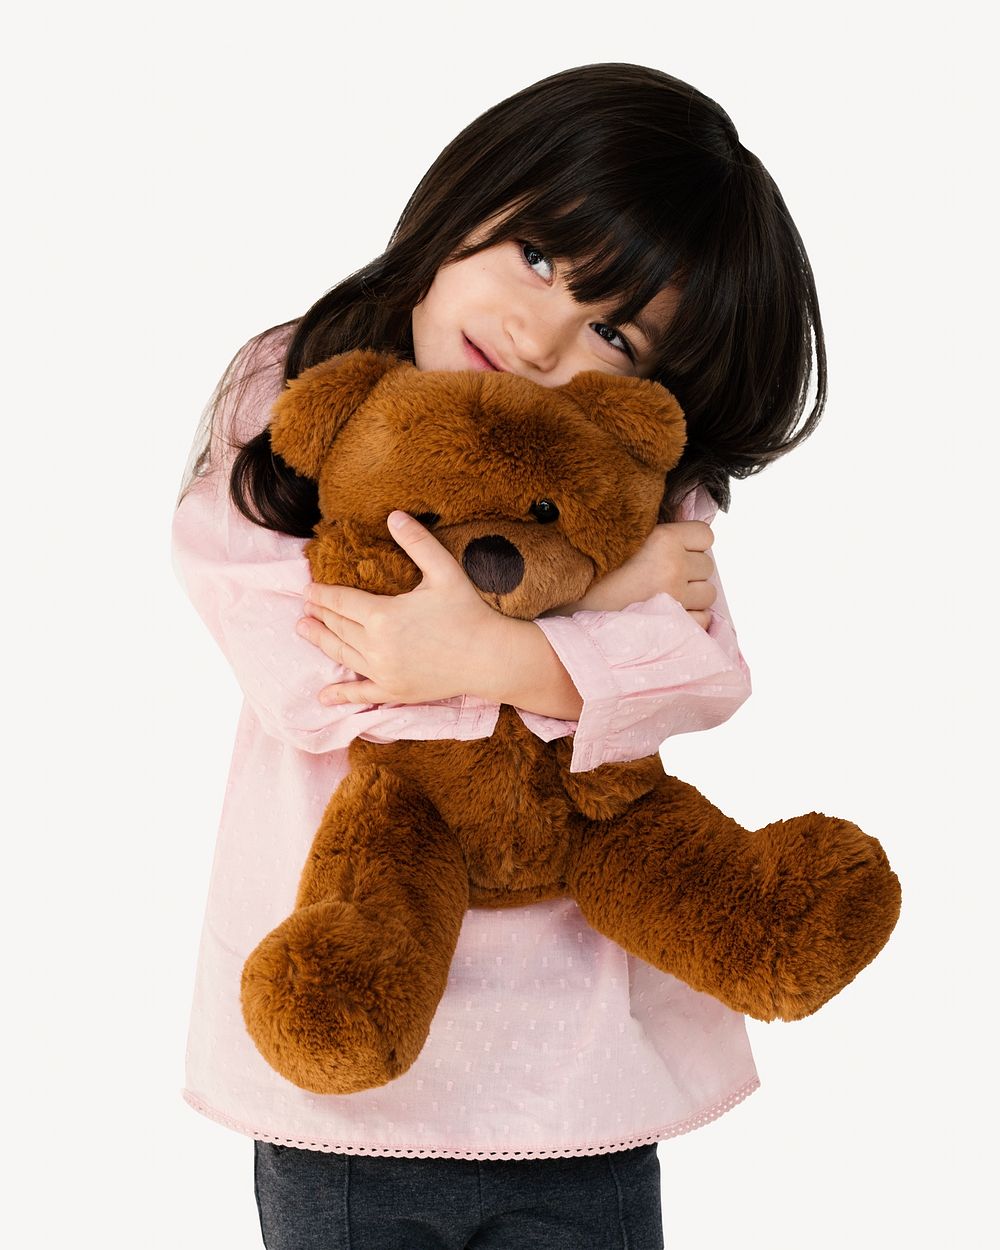 Girl holding teddy bear, isolated image